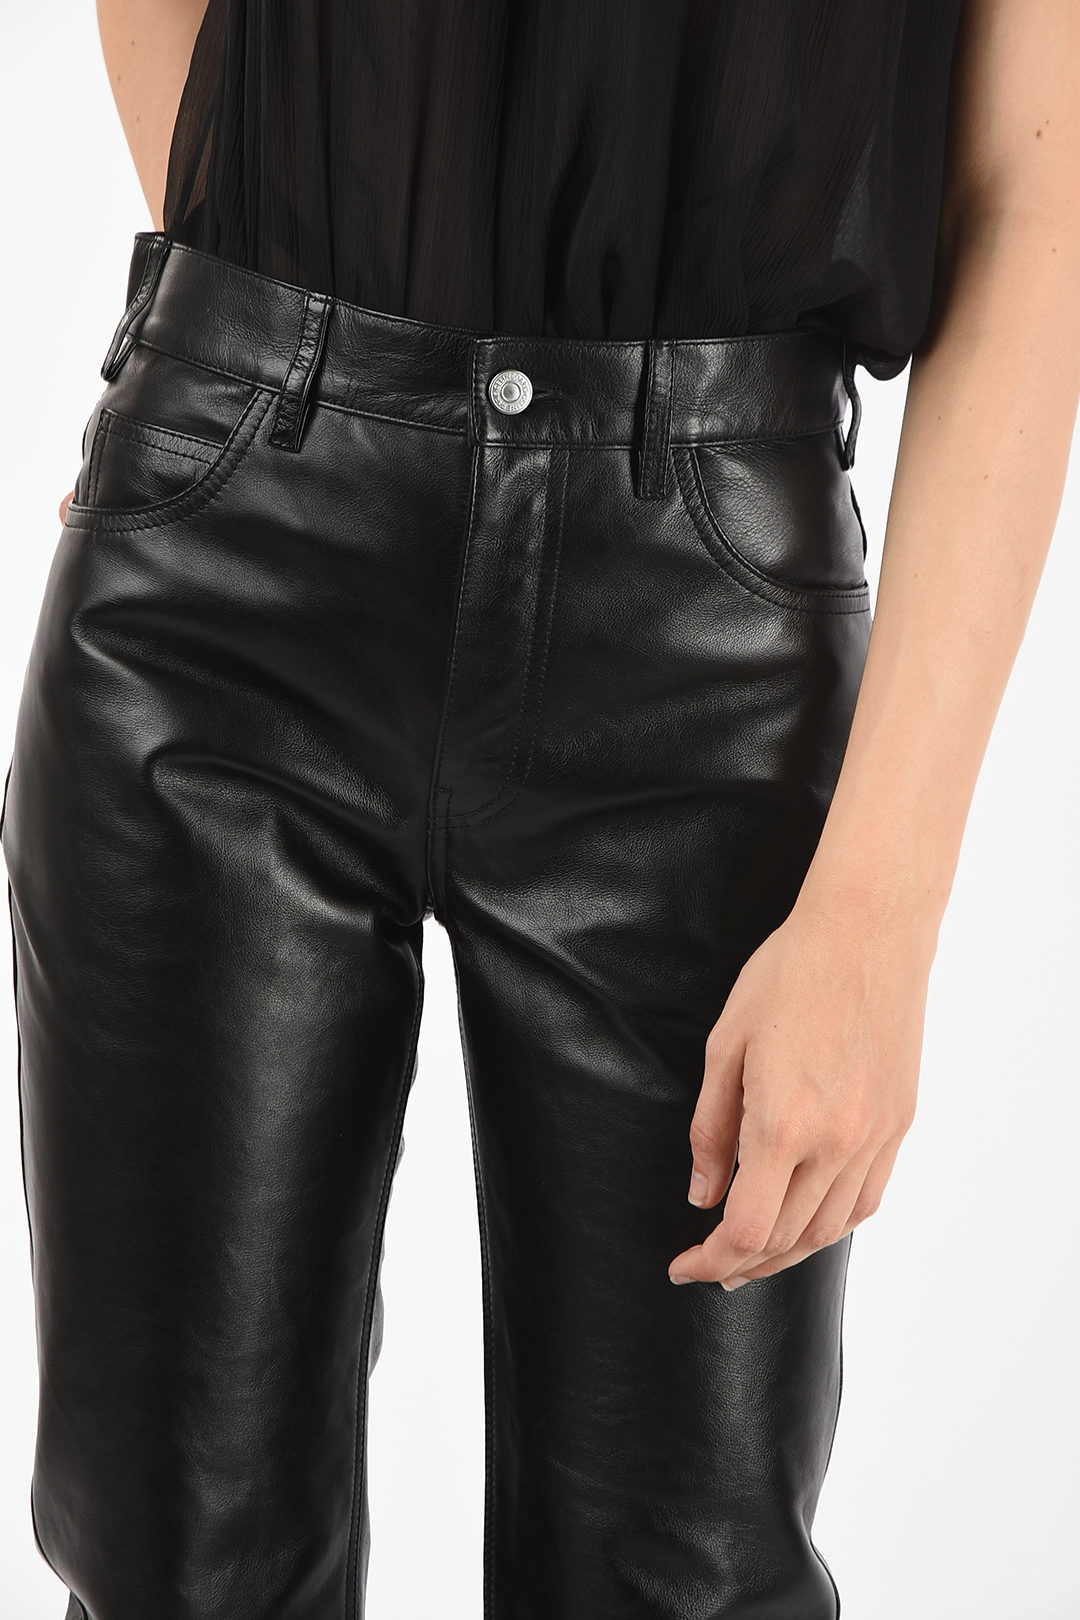 Celine leather pants women - Glamood Outlet